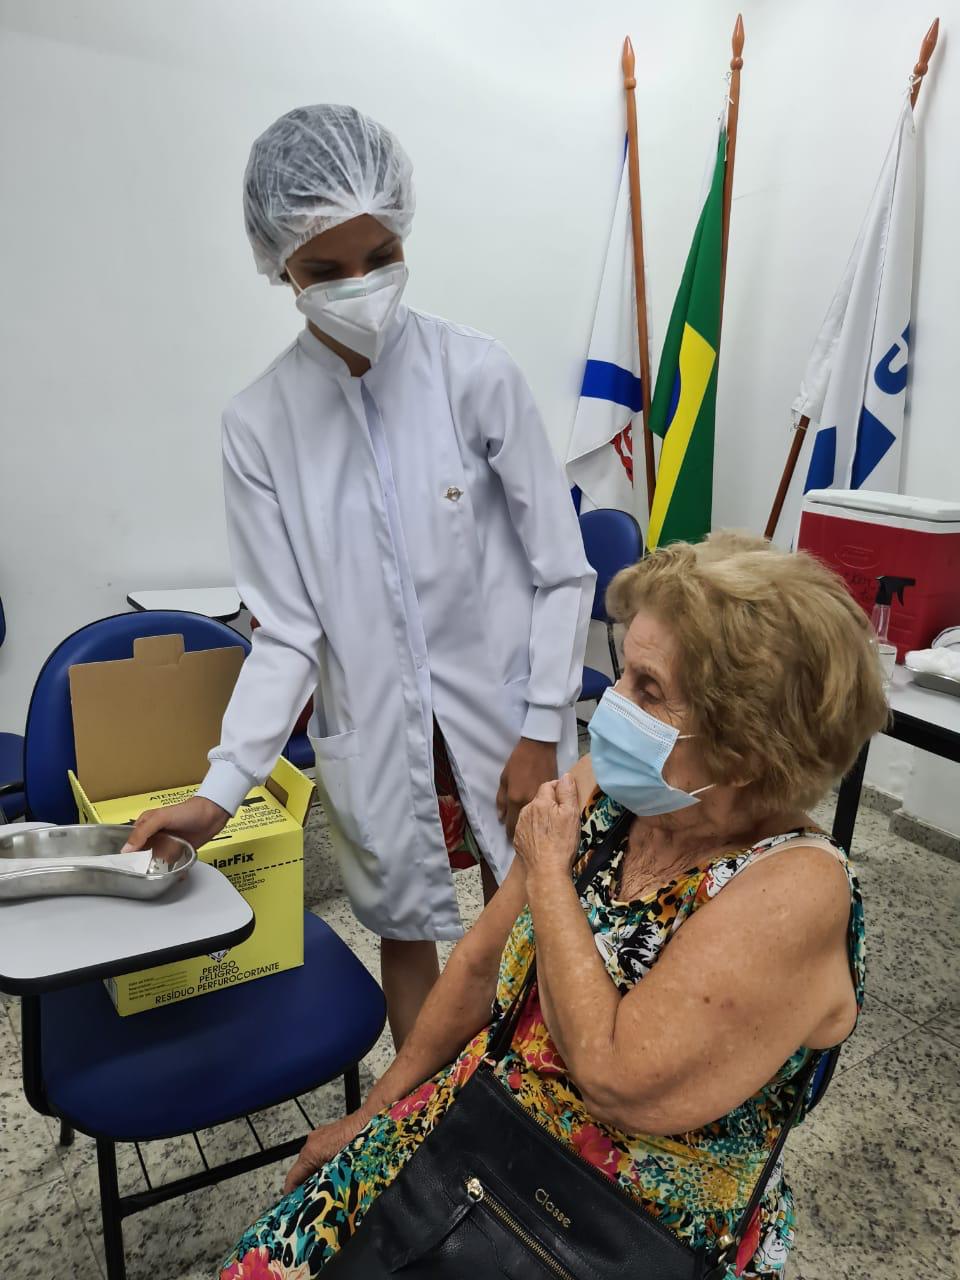 A representante insulana no The Voice +, Miracy de Barros, de 83 anos, foi vacinada na terça (16) e está pronta para soltar sua voz no programa